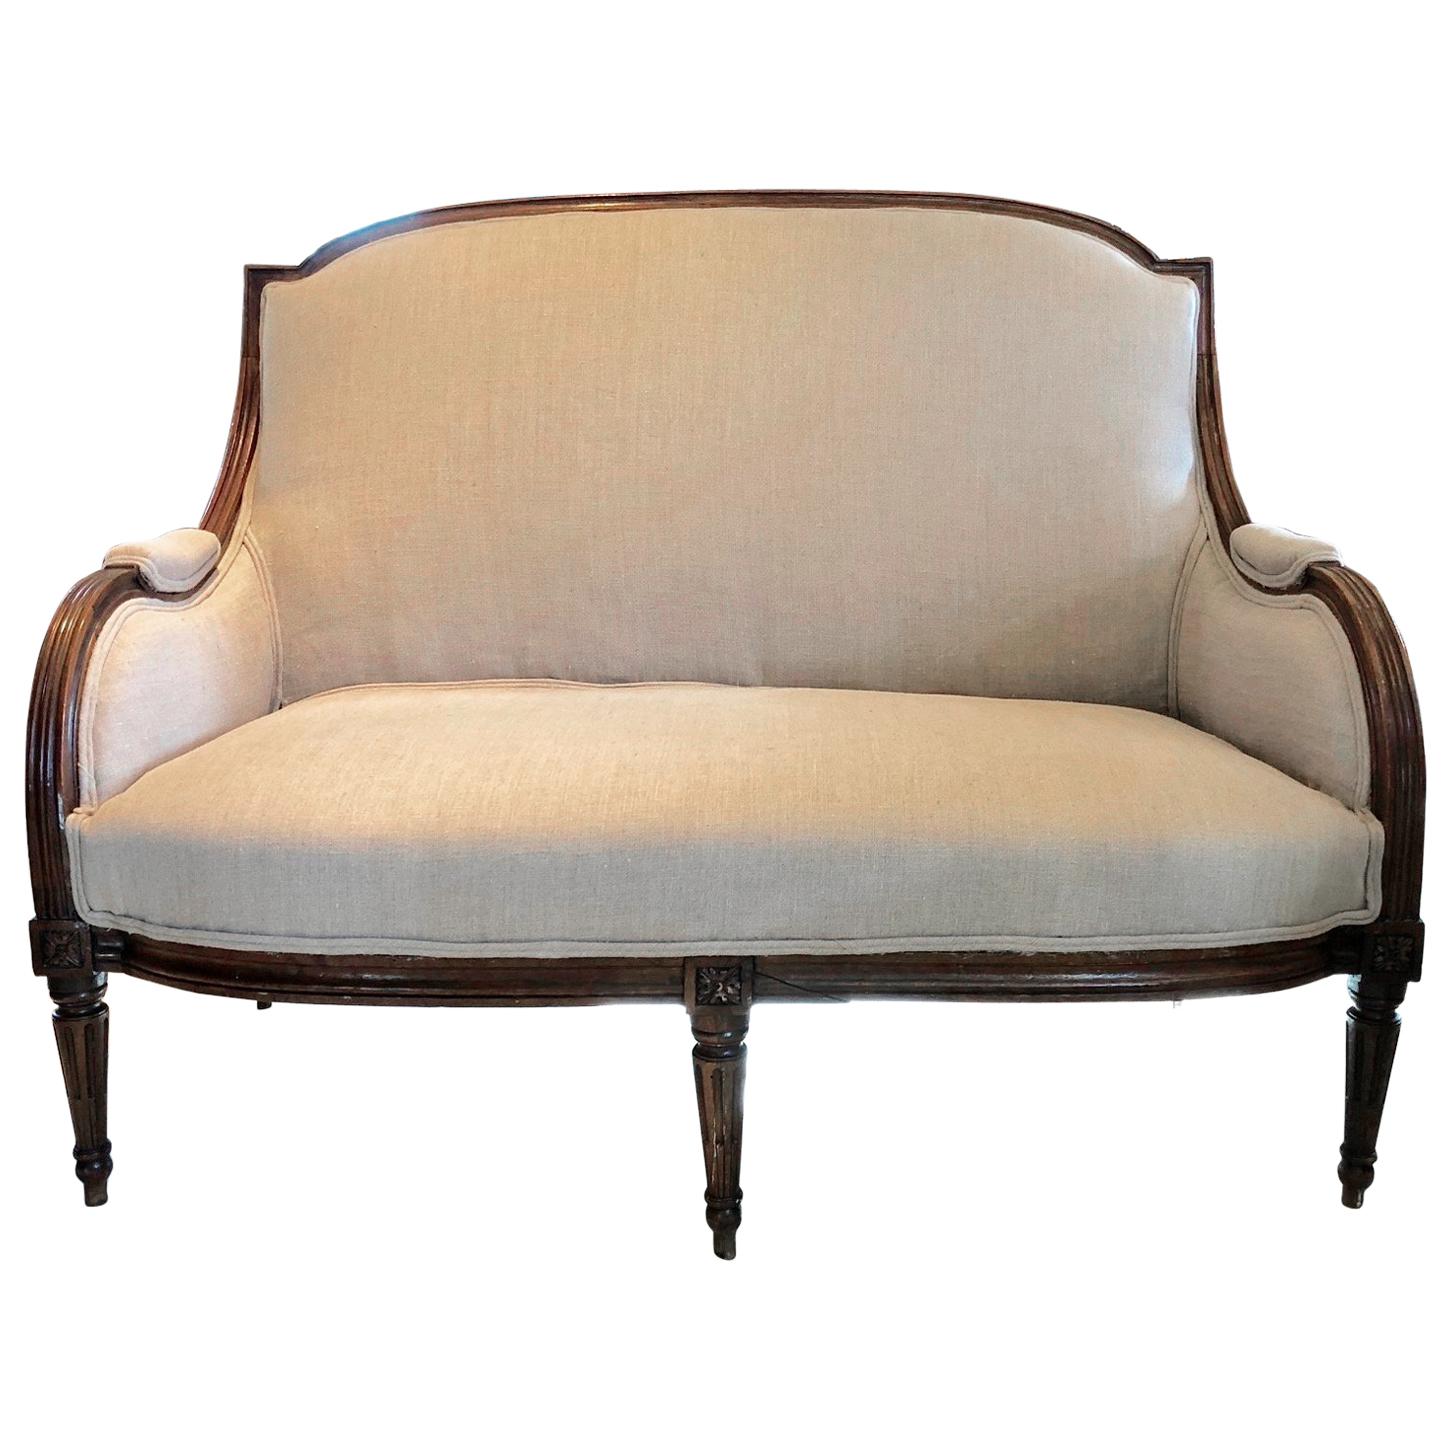 Stunning Antique French Upholstered Loveseat